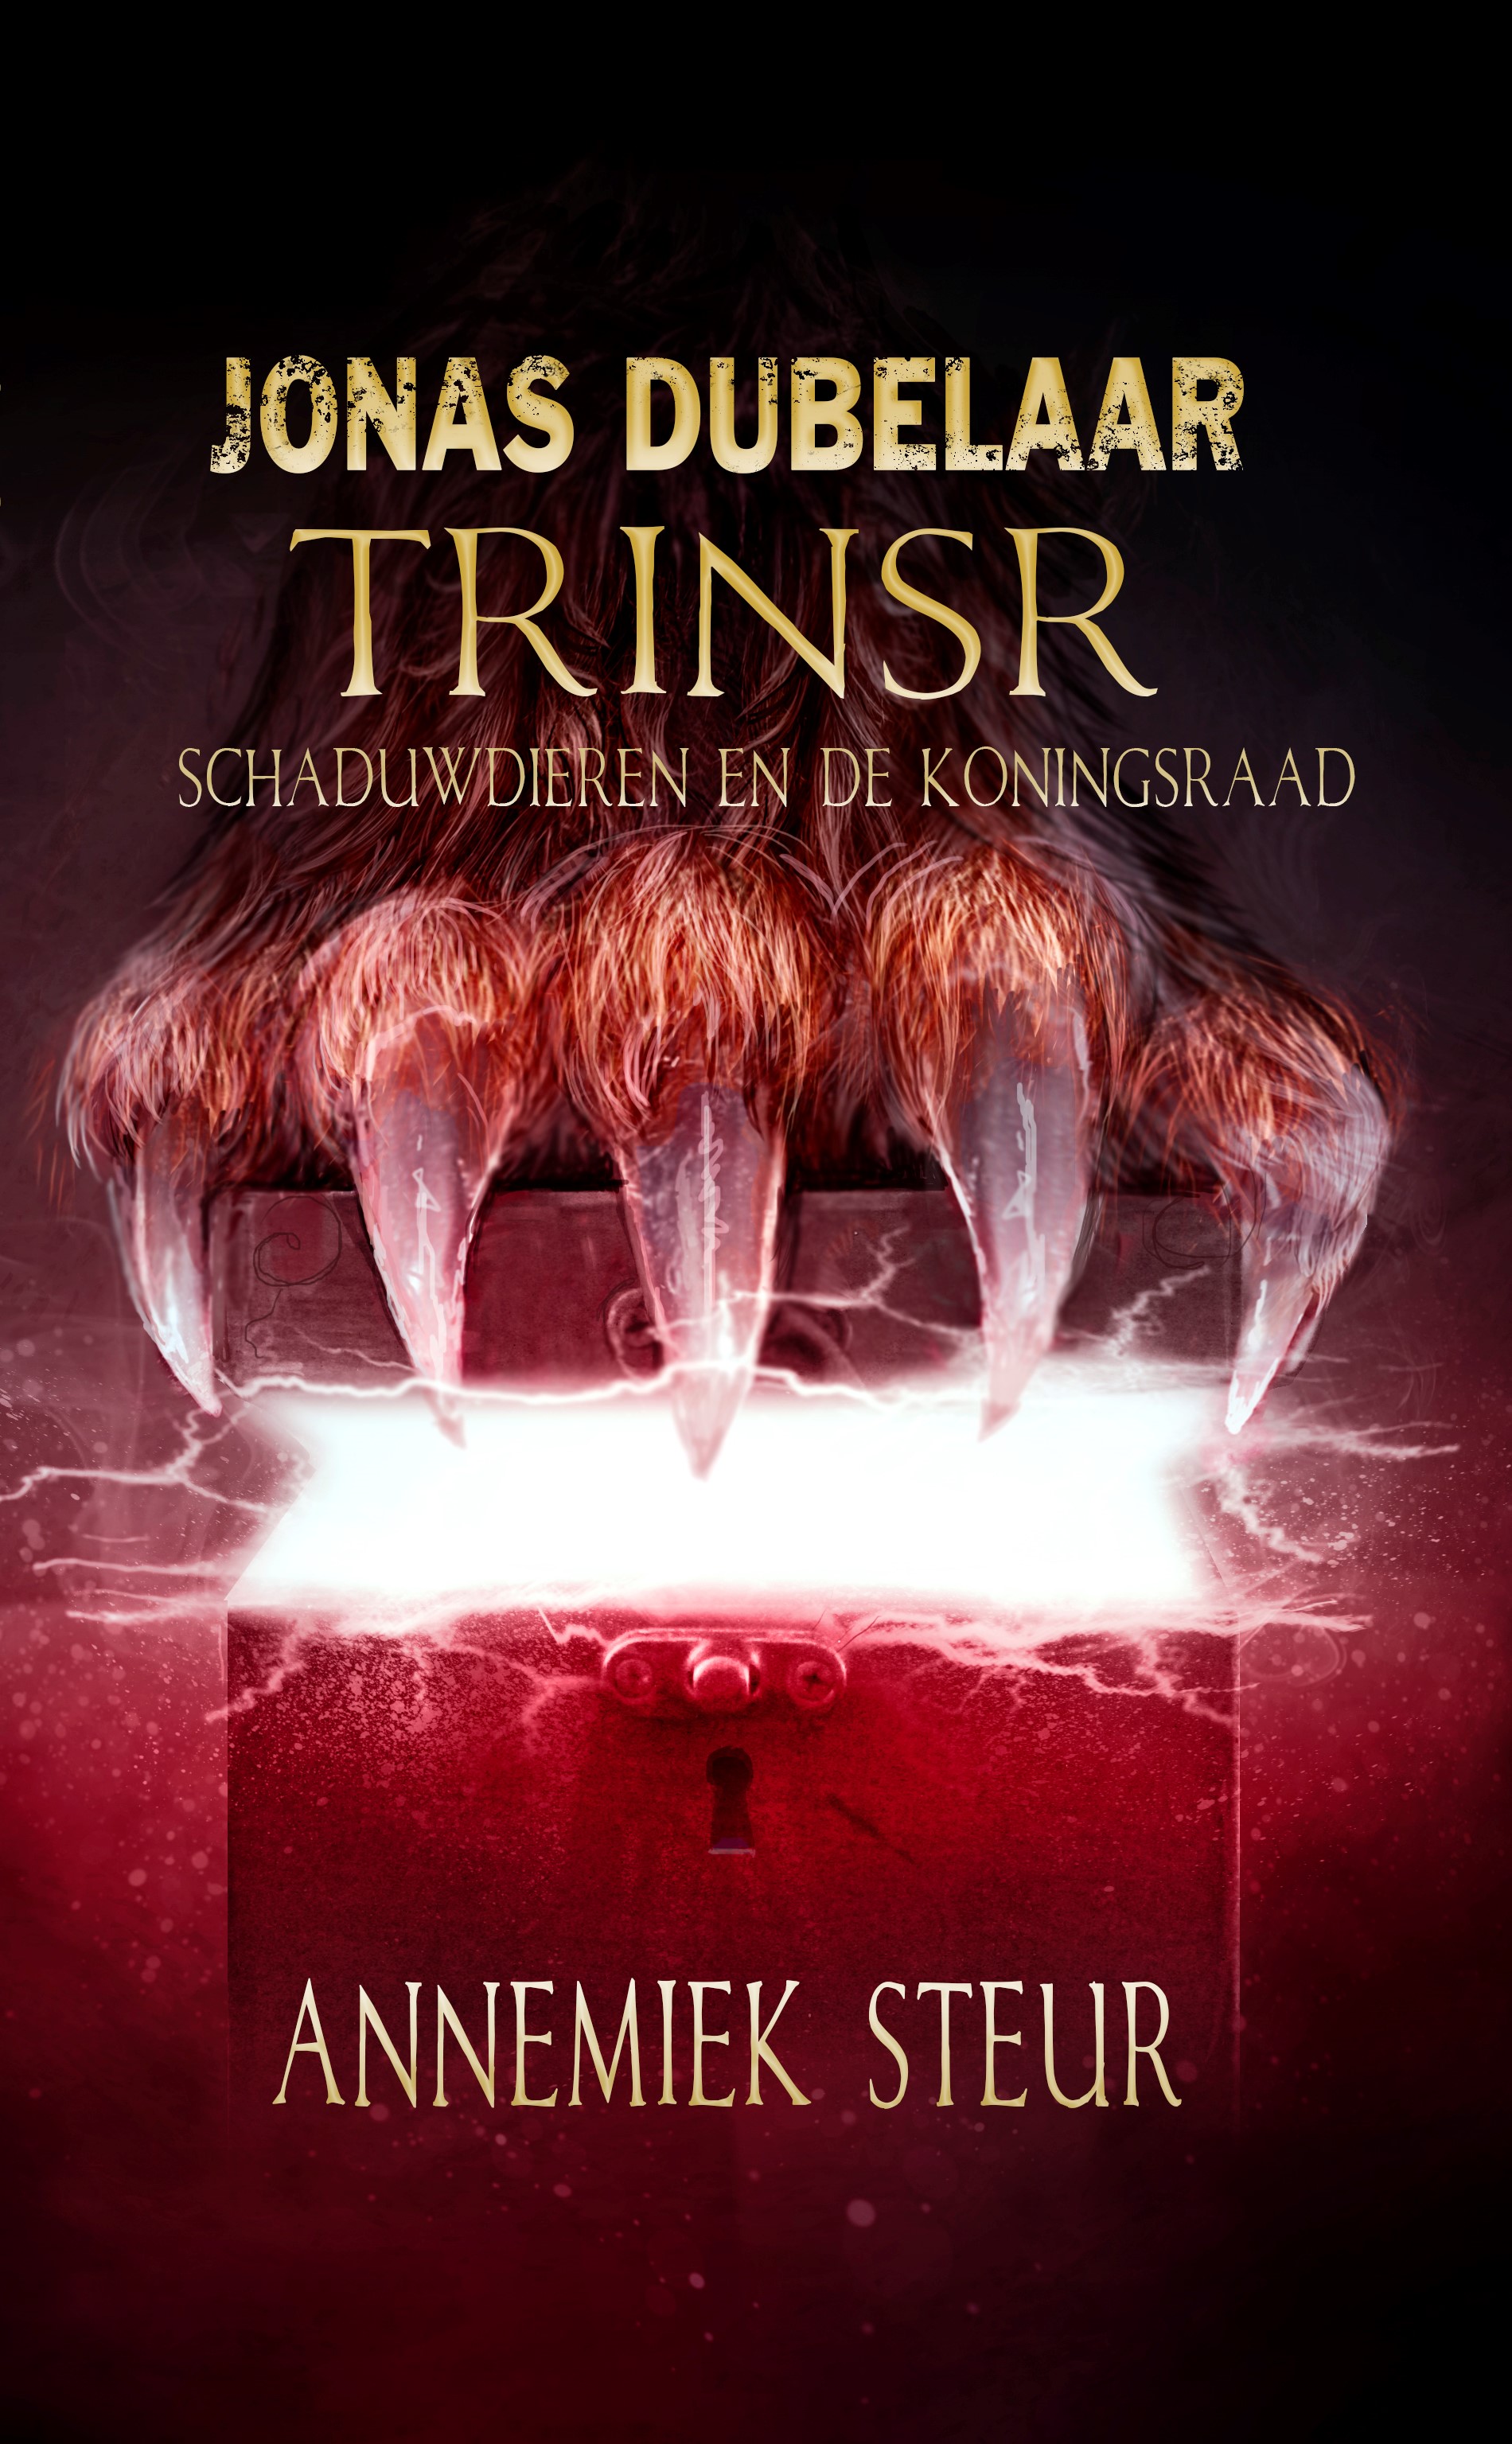 Annemiek Steur: Trinsr, schaduwdieren en de koningsraad (Dutch language, 2022)